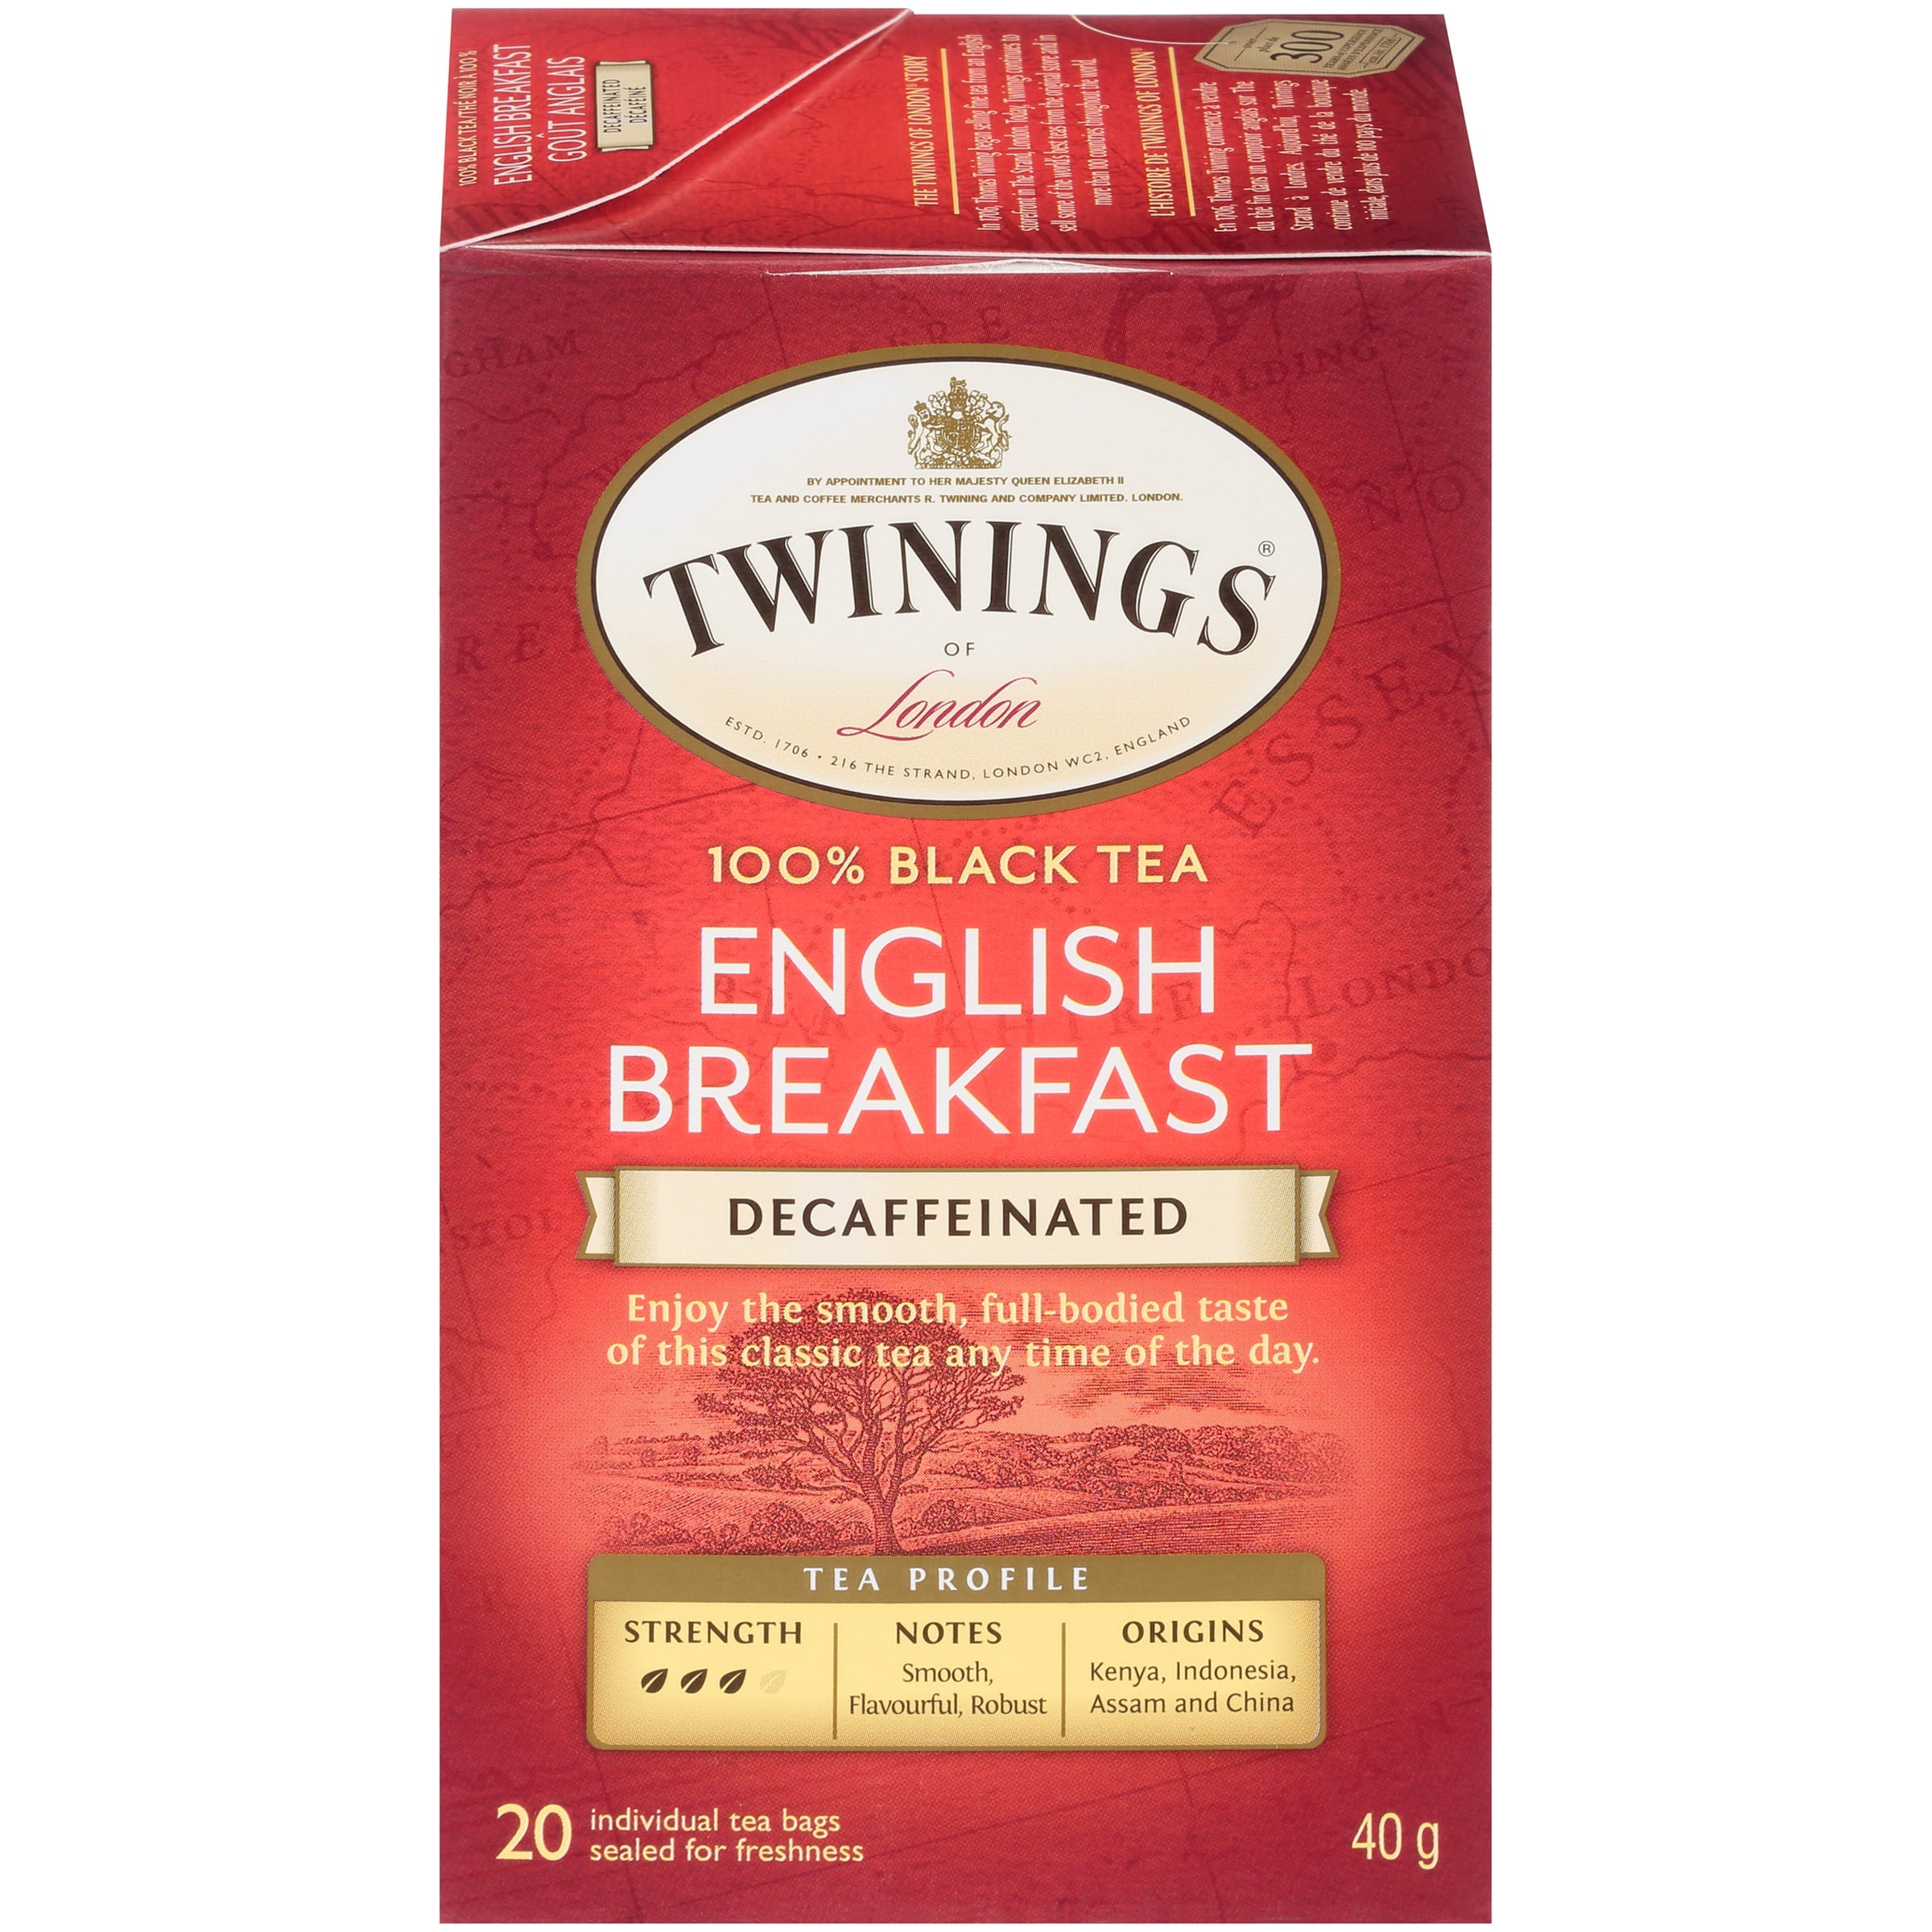 Twinings of London Decaffeinated English Breakfast Black Tea Bags, 20 Ct, 1.41 oz